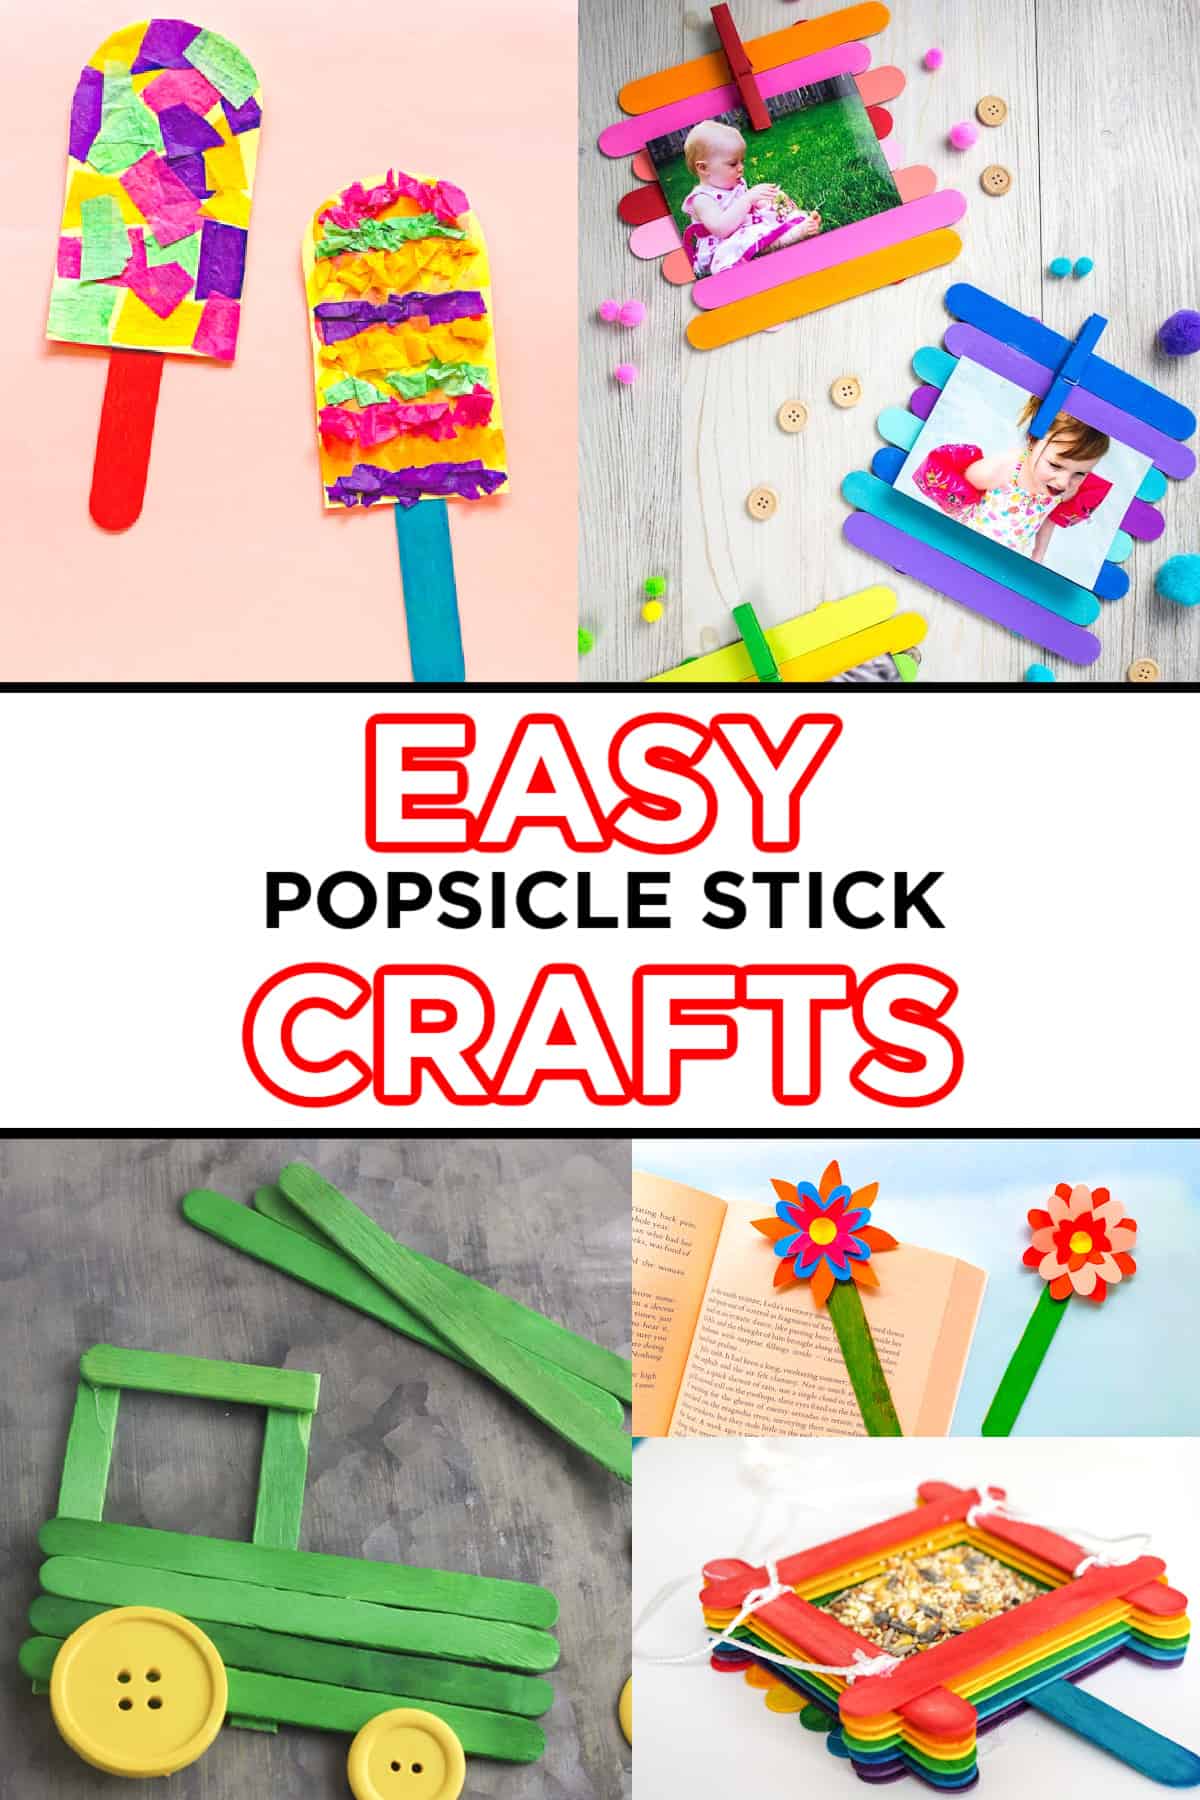 Ice cream sticks kids activity, Popsicle stick craft coasters